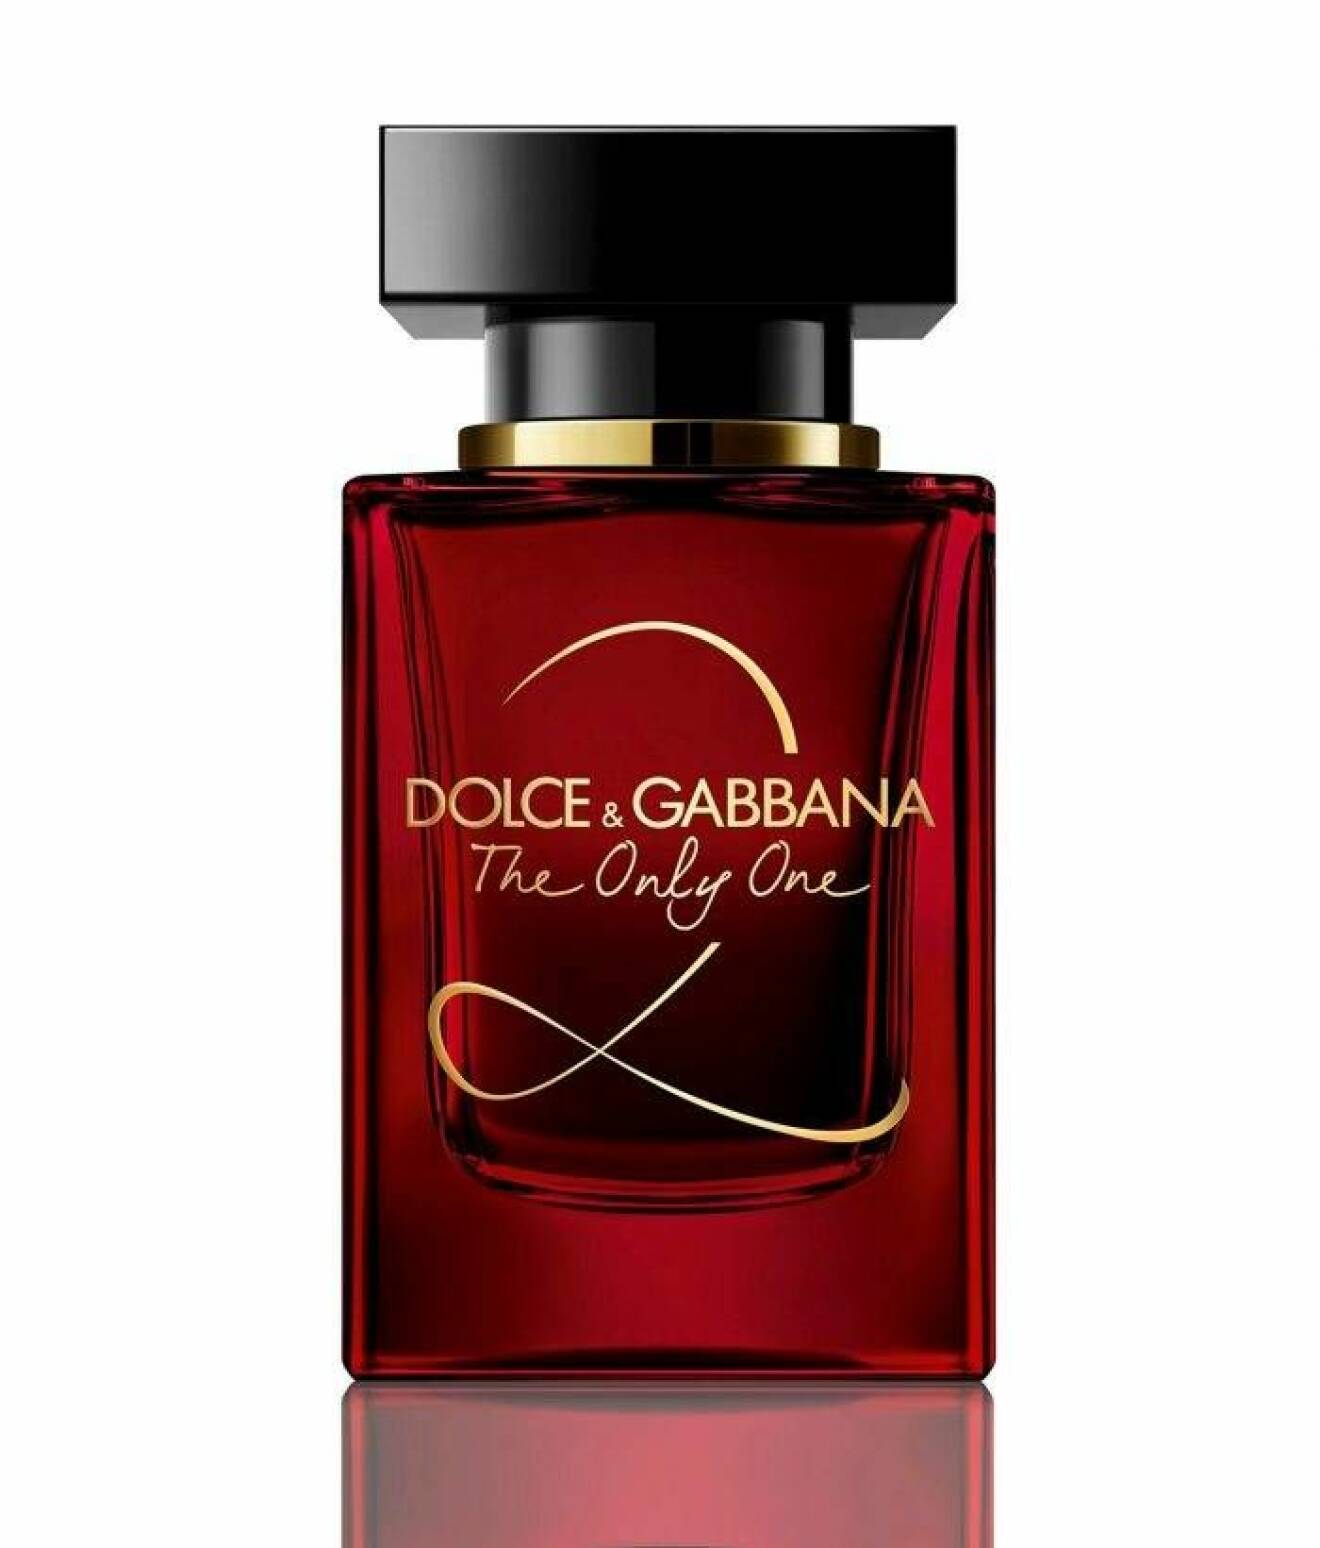 Parfymflaska The only one 2 frånDolce & Gabbana.